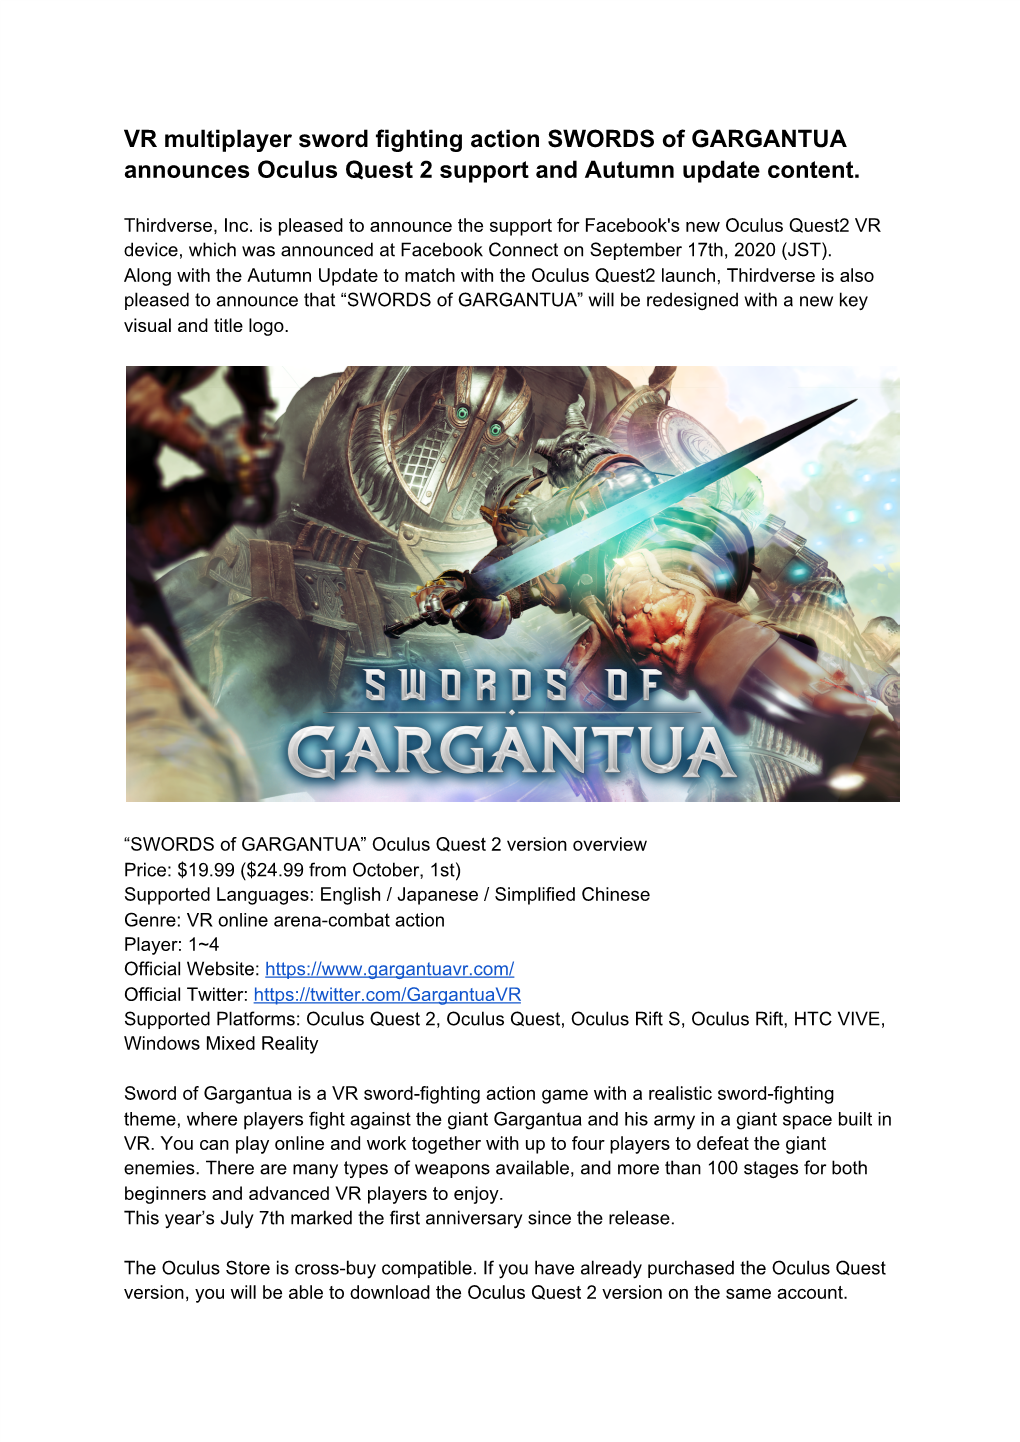 VR Multiplayer Sword Fighting Action SWORDS of GARGANTUA Announces Oculus Quest 2 Support and Autumn Update Content